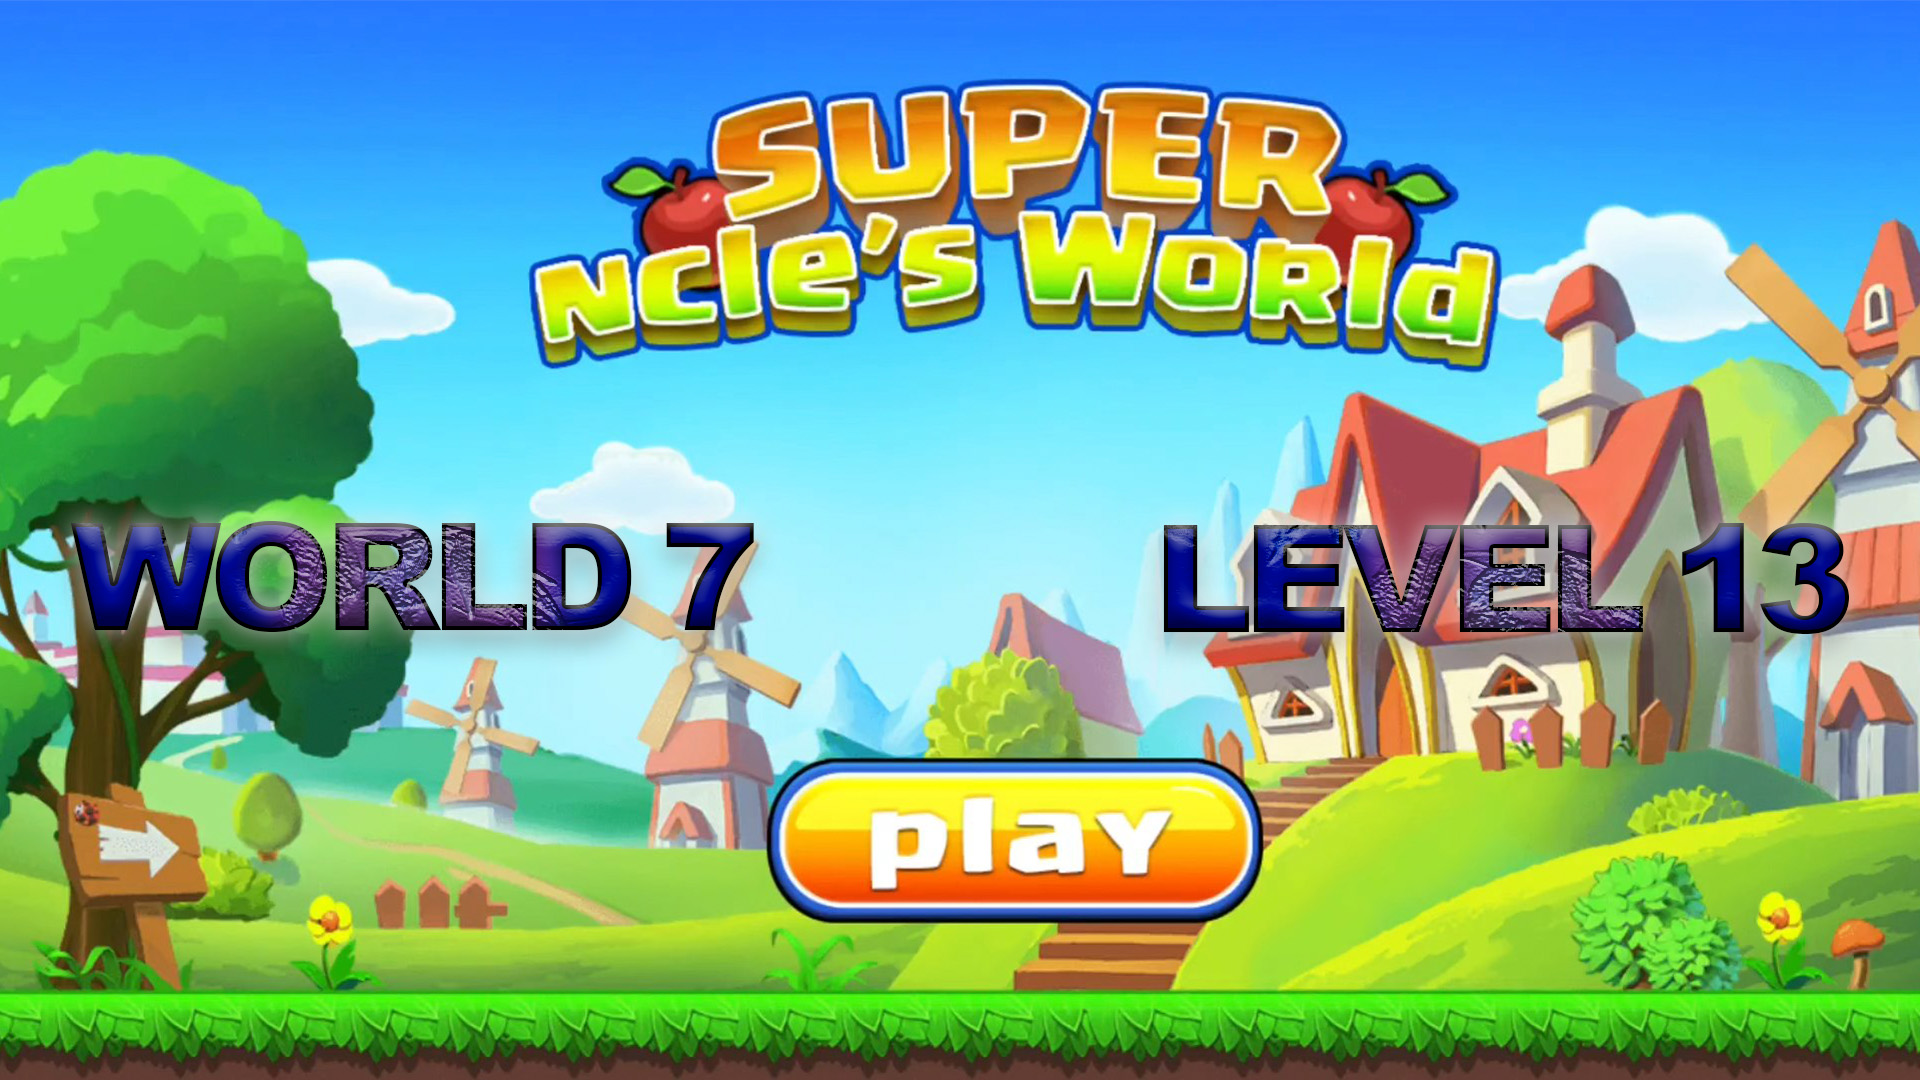 Super ncle's  World 7. Level 13.